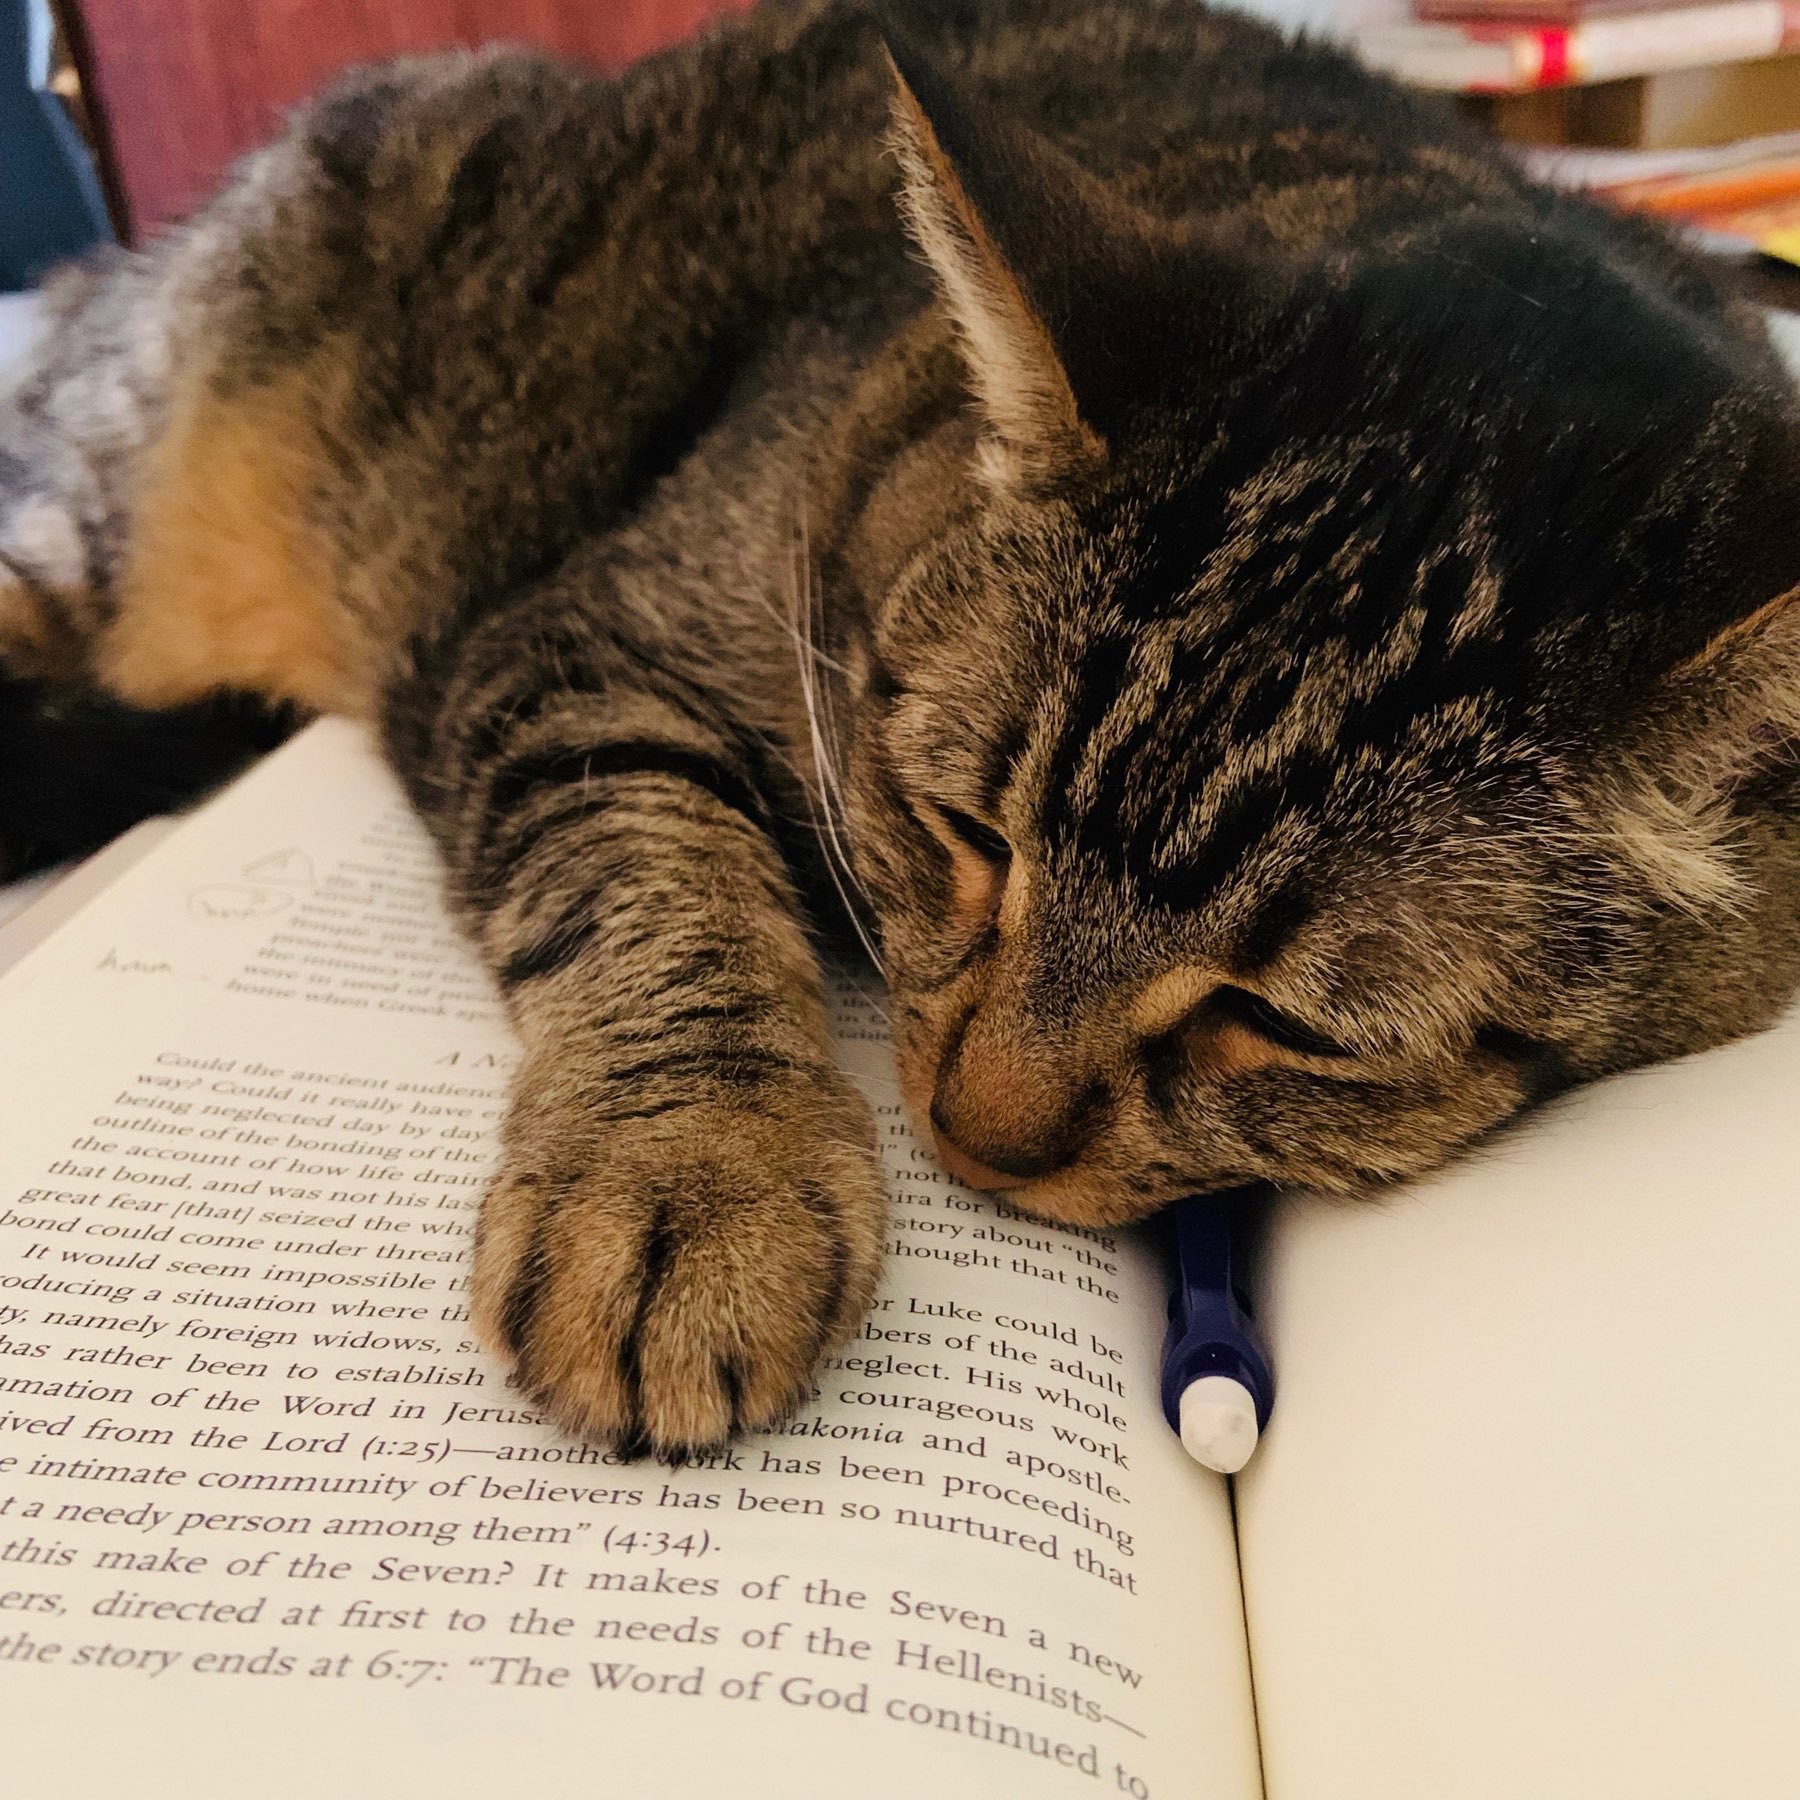 cat sleeping on a book